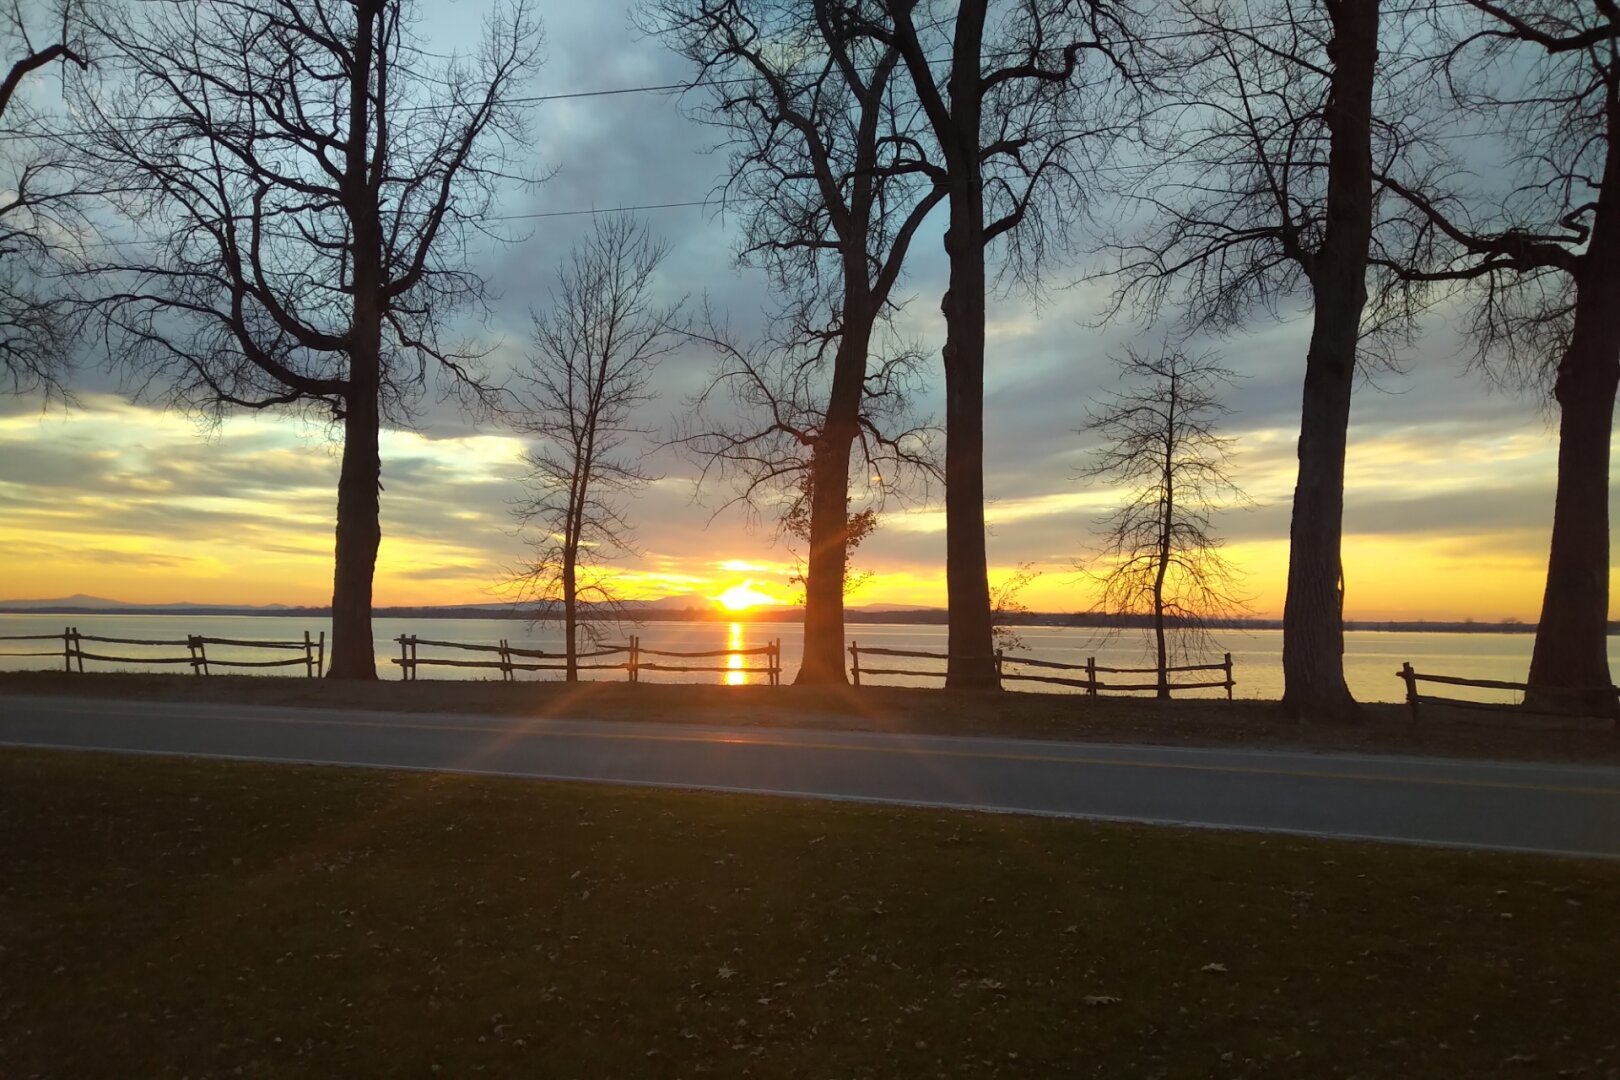 Sunset over Lake Champlain